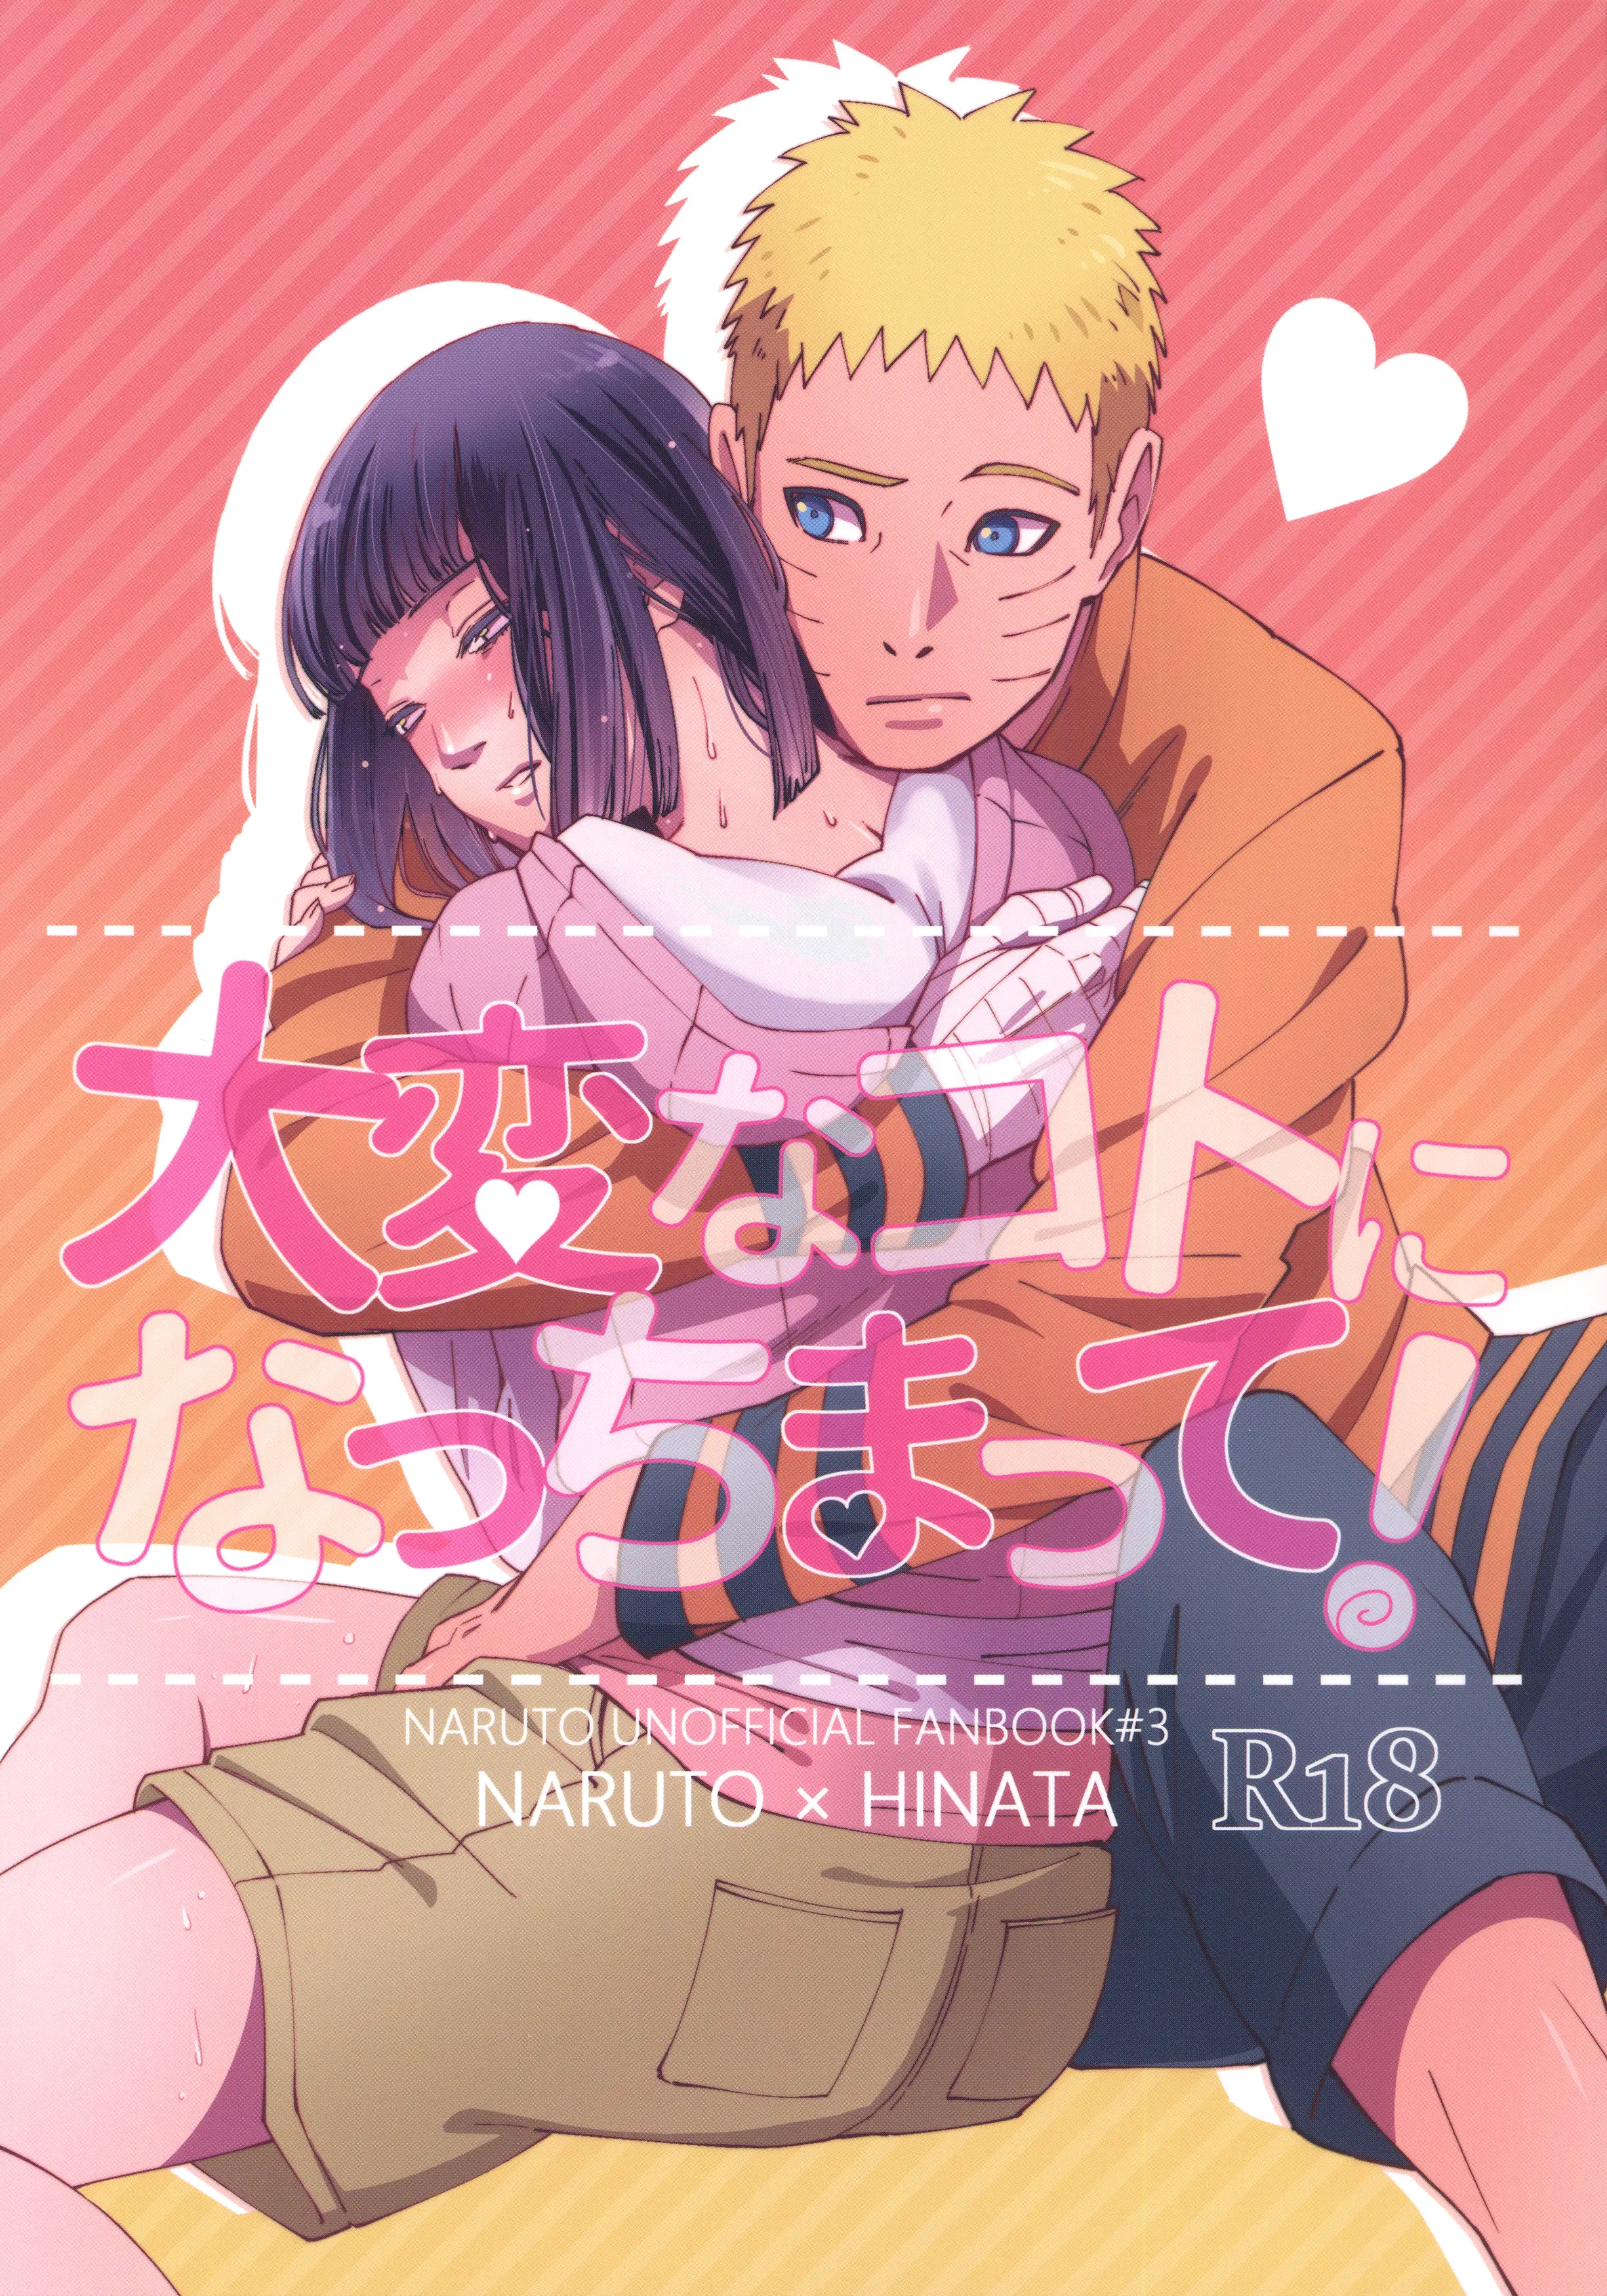 Naruto gives Hinata a romantic fuck in sex comics